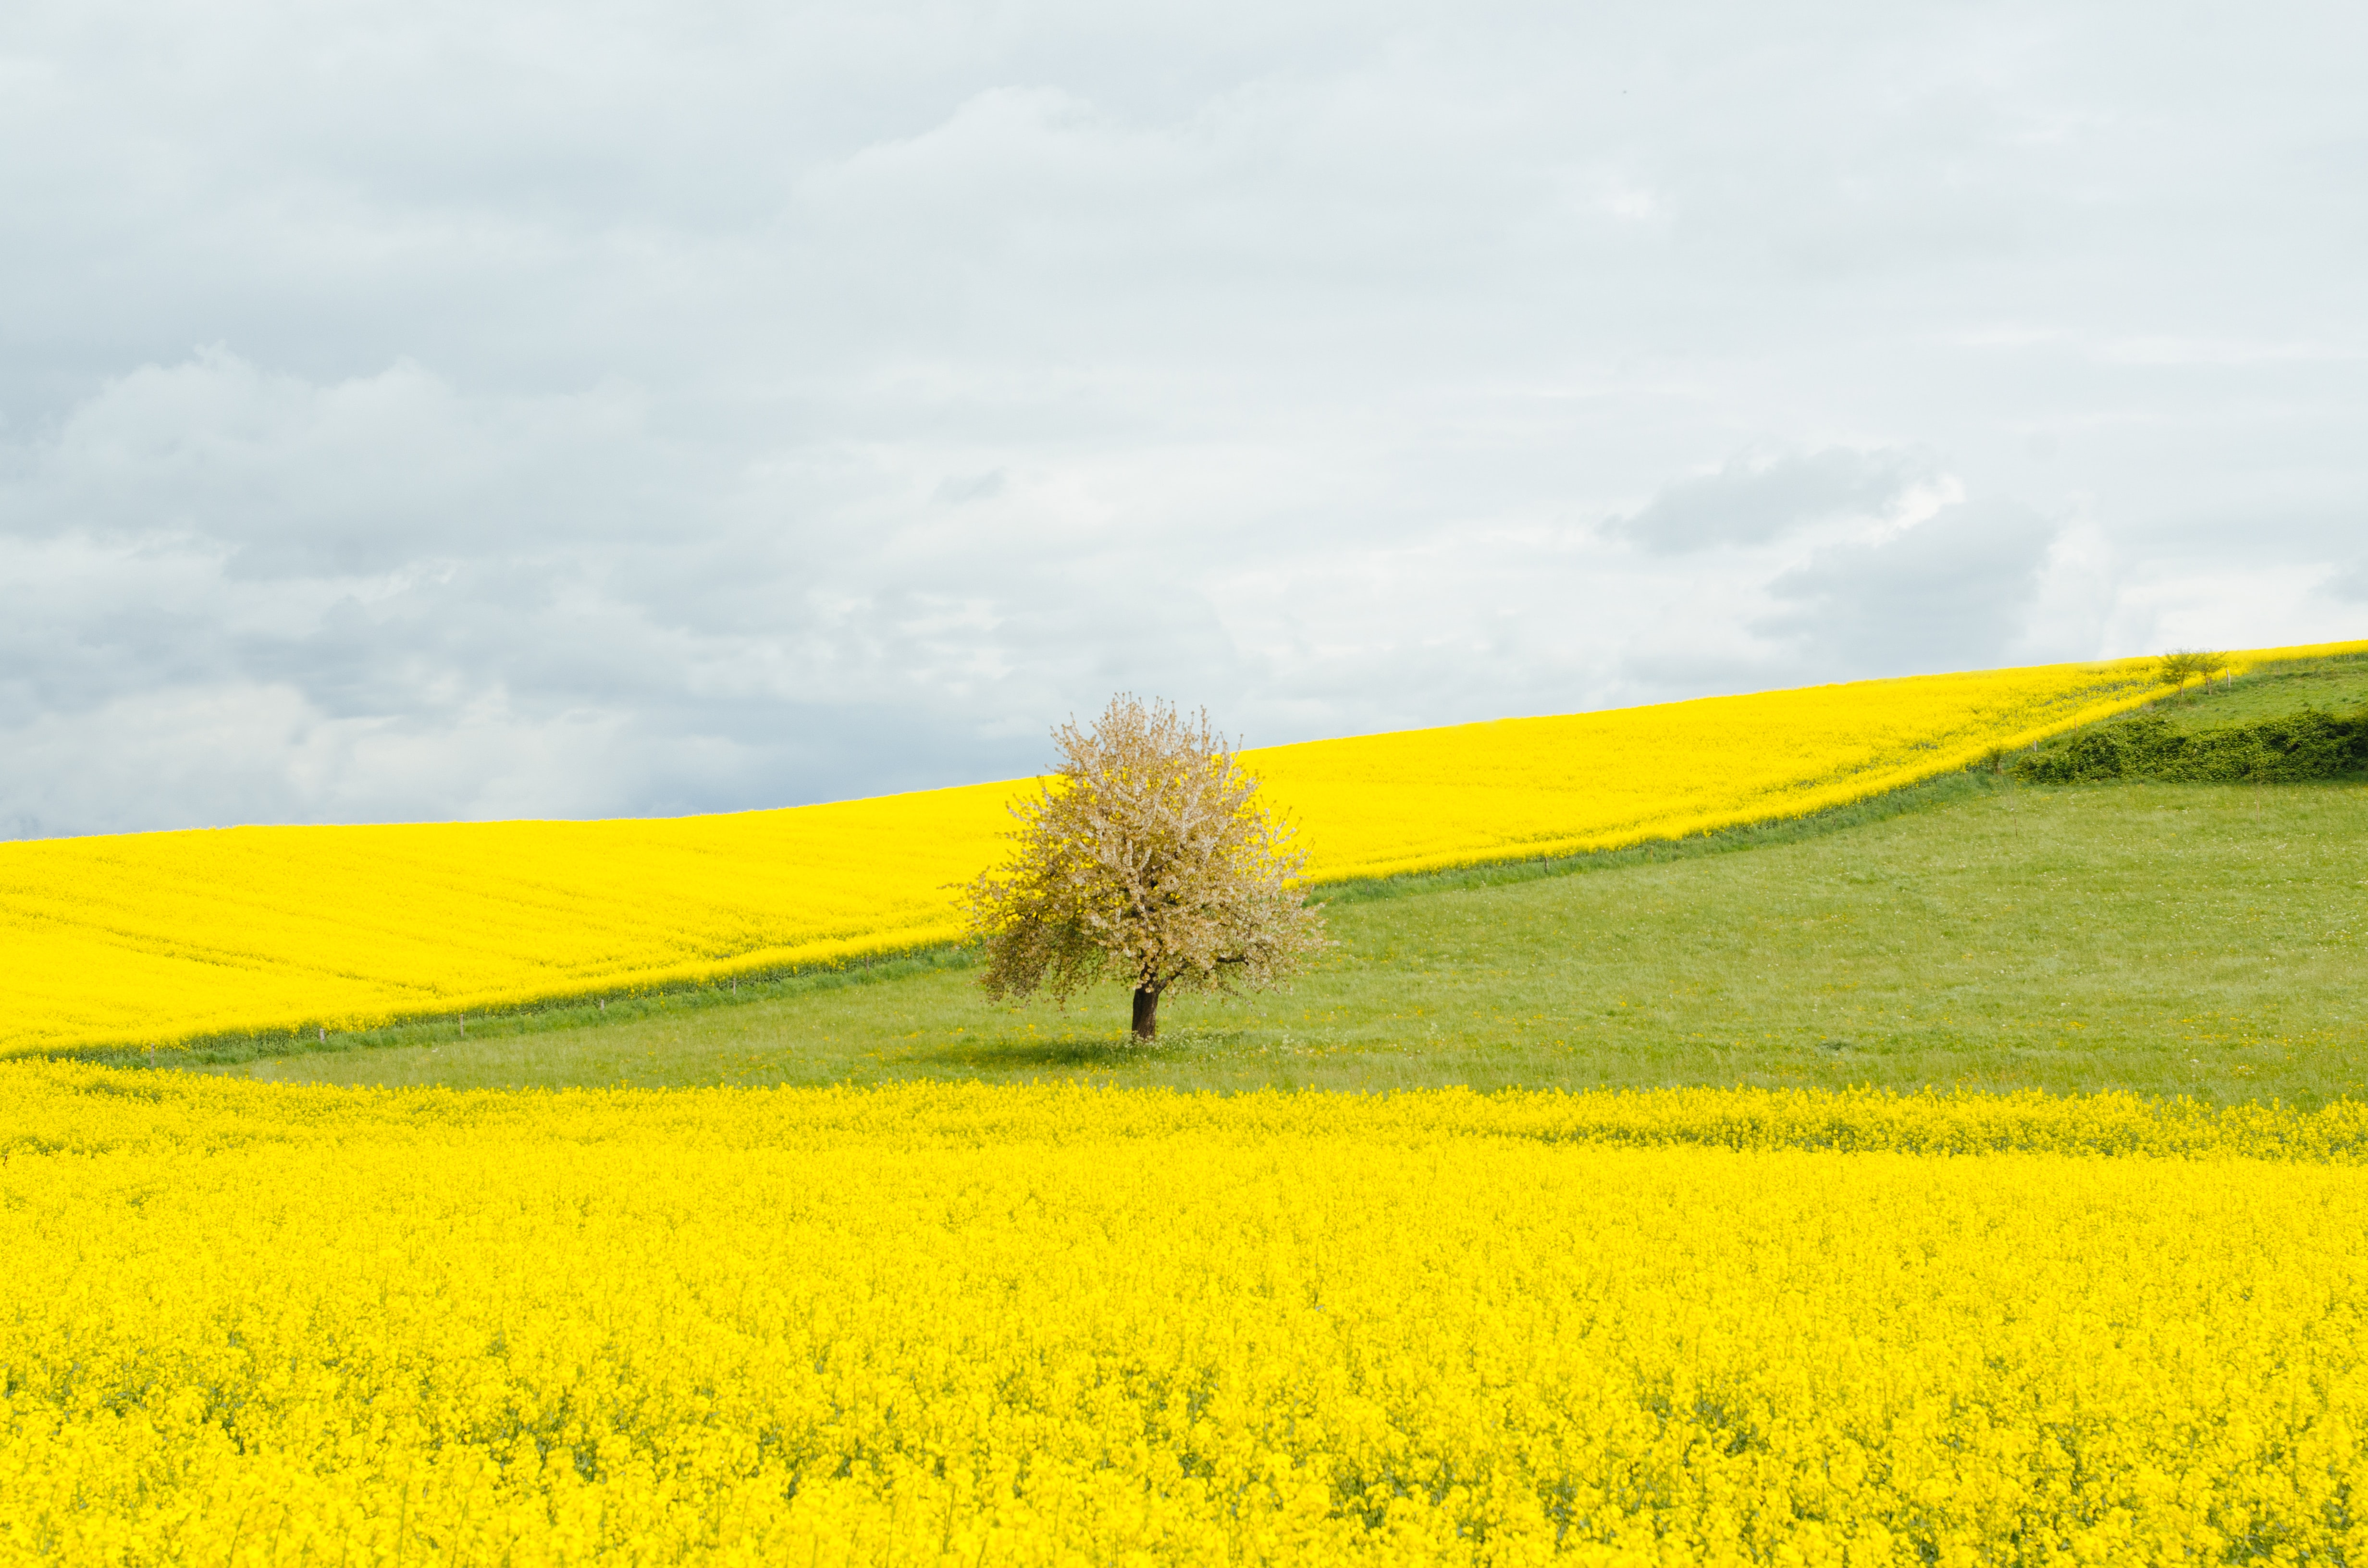 Виднелось желтое поле. Желтое поле. Красивое поле. Поле с желтыми цветами. Желтый луг.